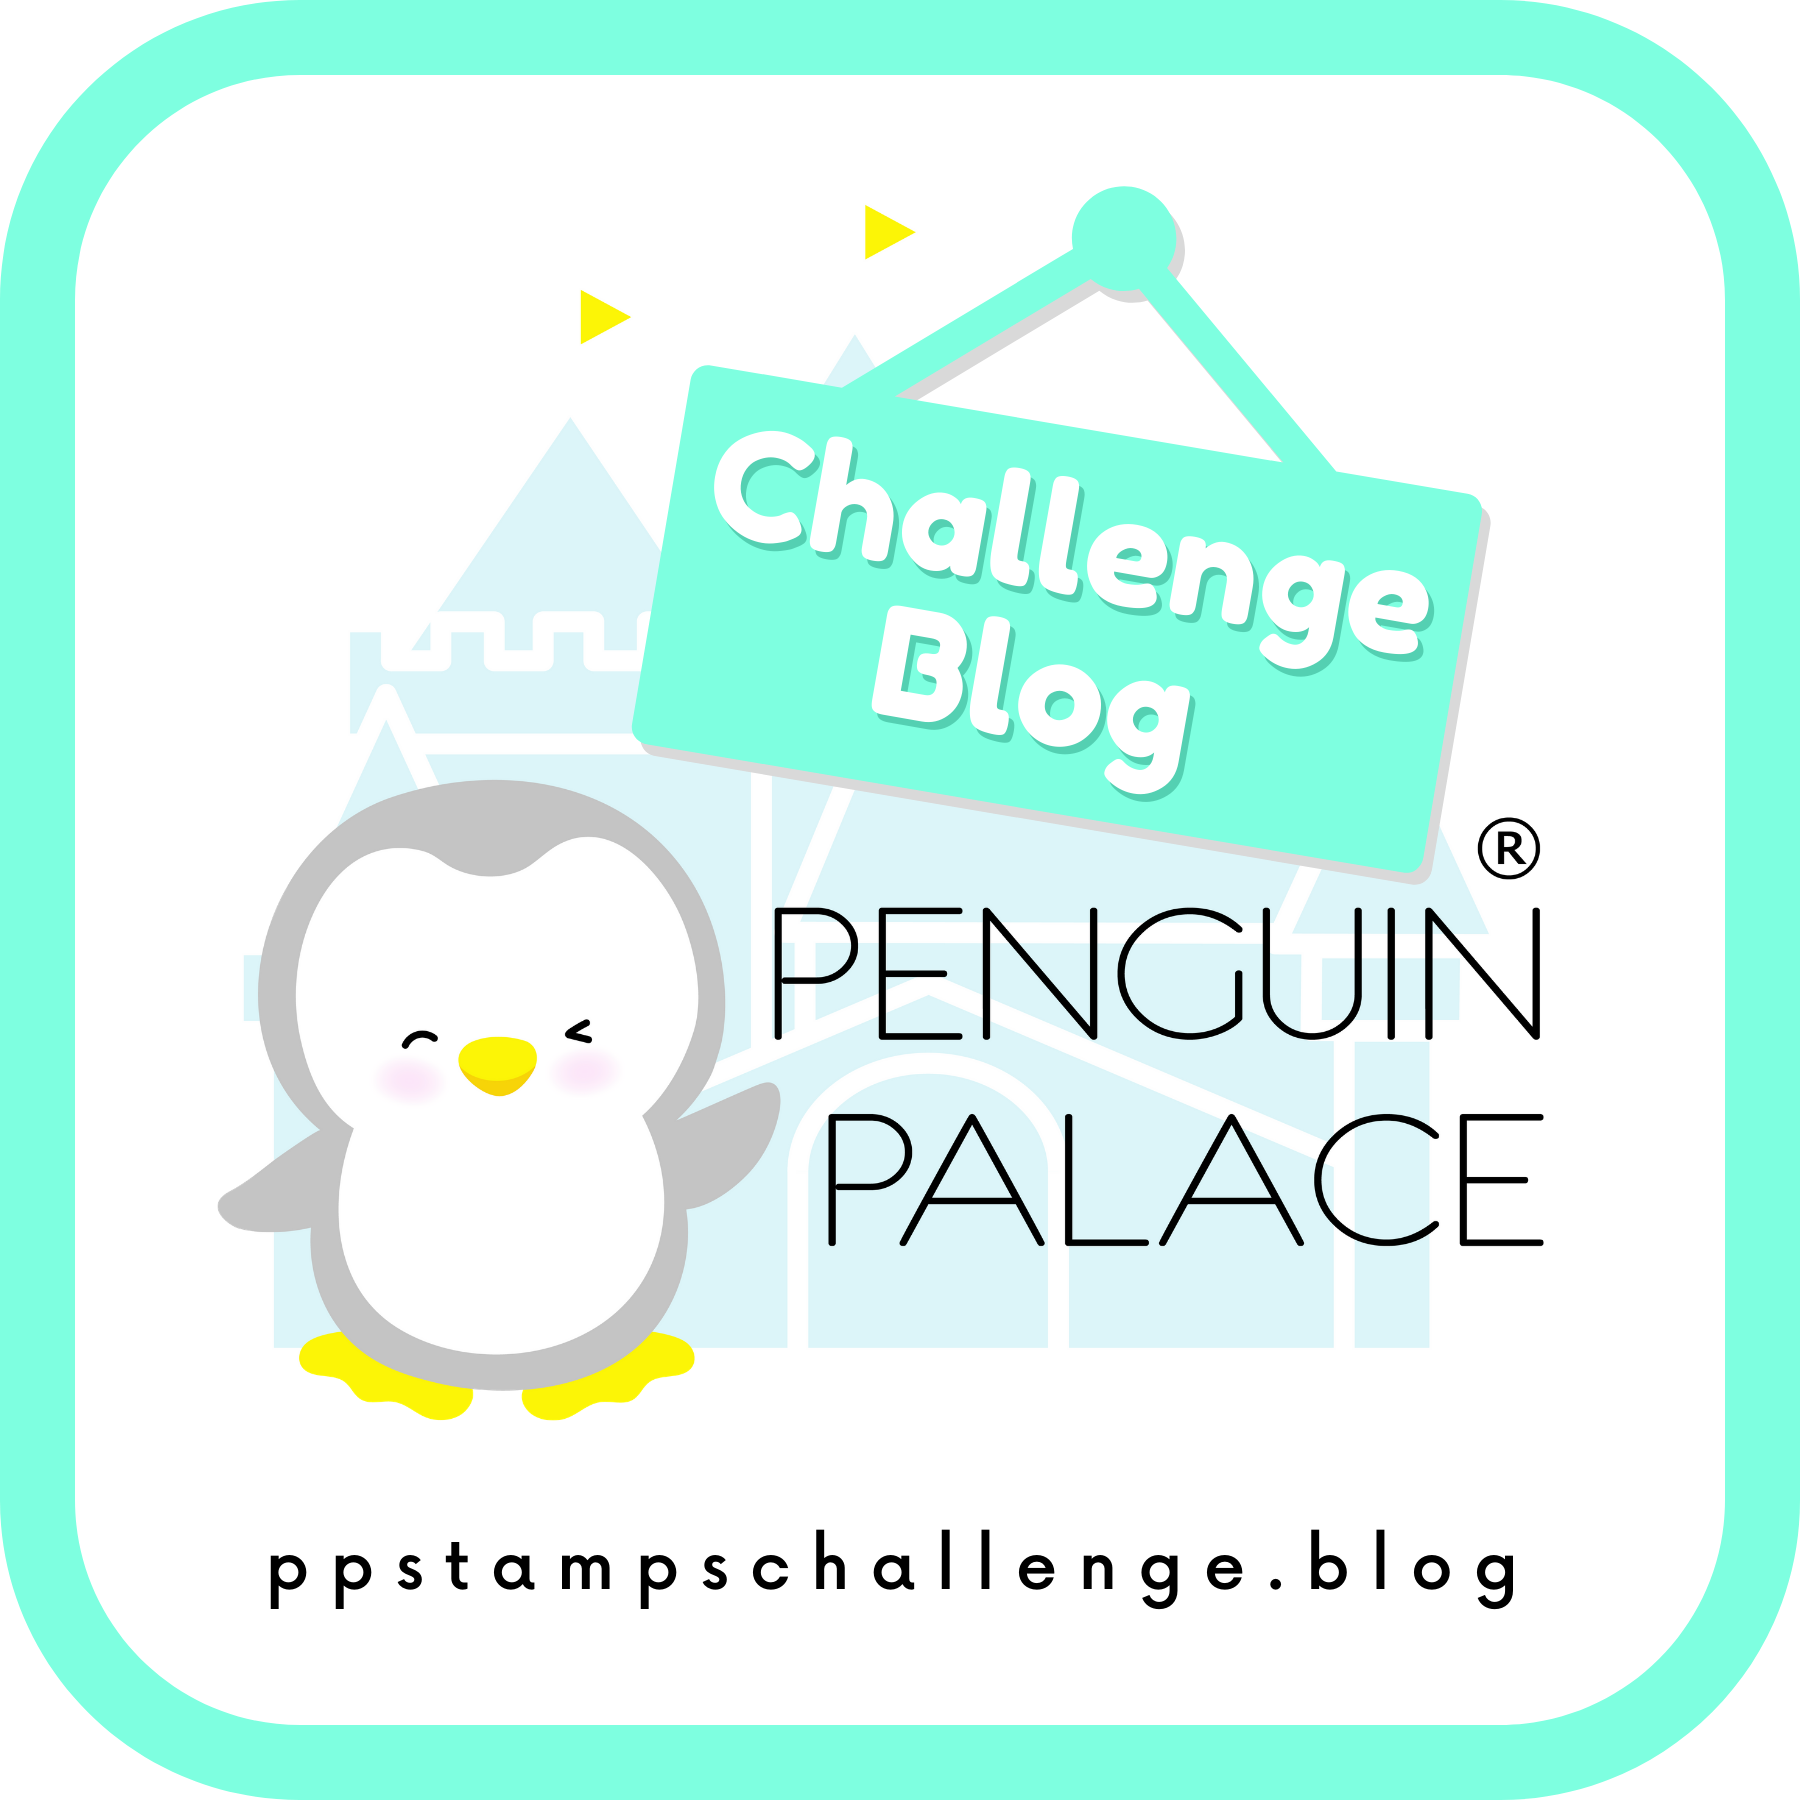 Penguin Palace challenge blog